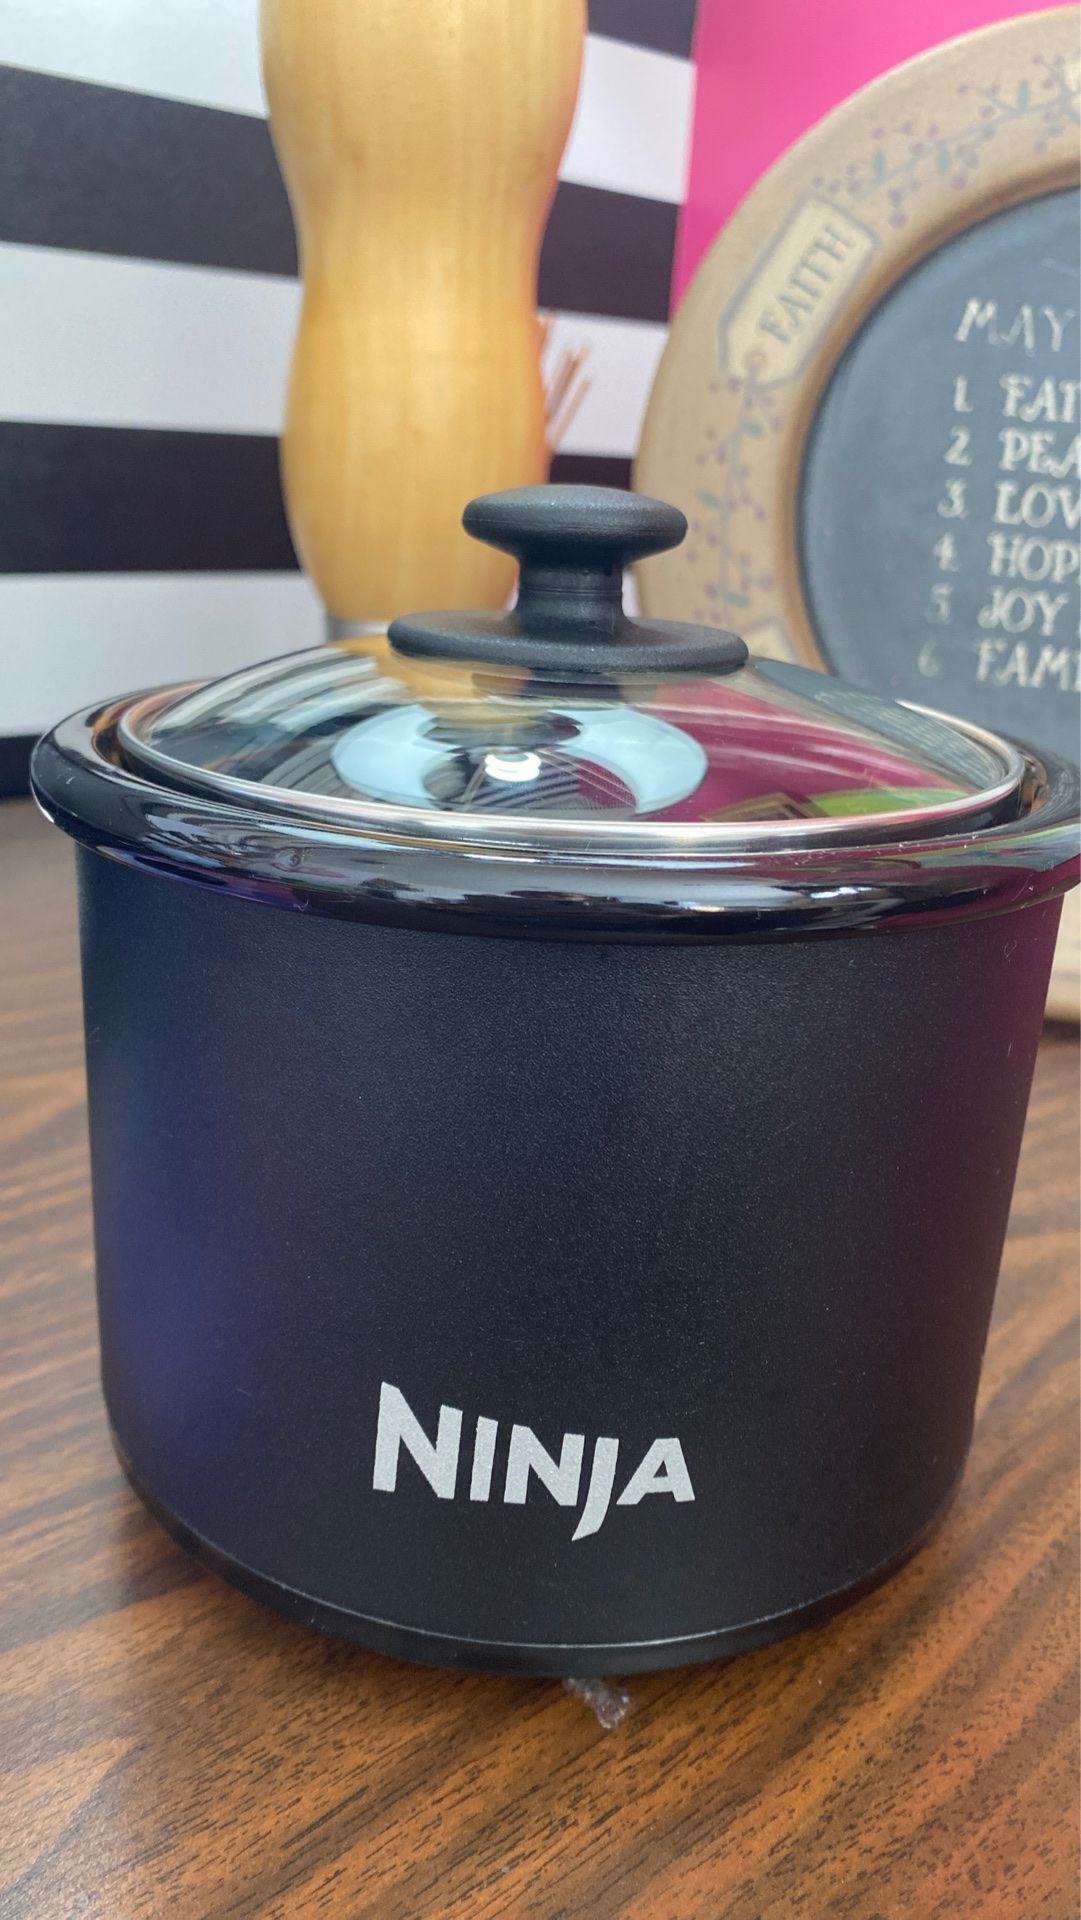 Ninja Mini Slow Cooker Crock Pot Personal Ceramic Warmer 2 Cup